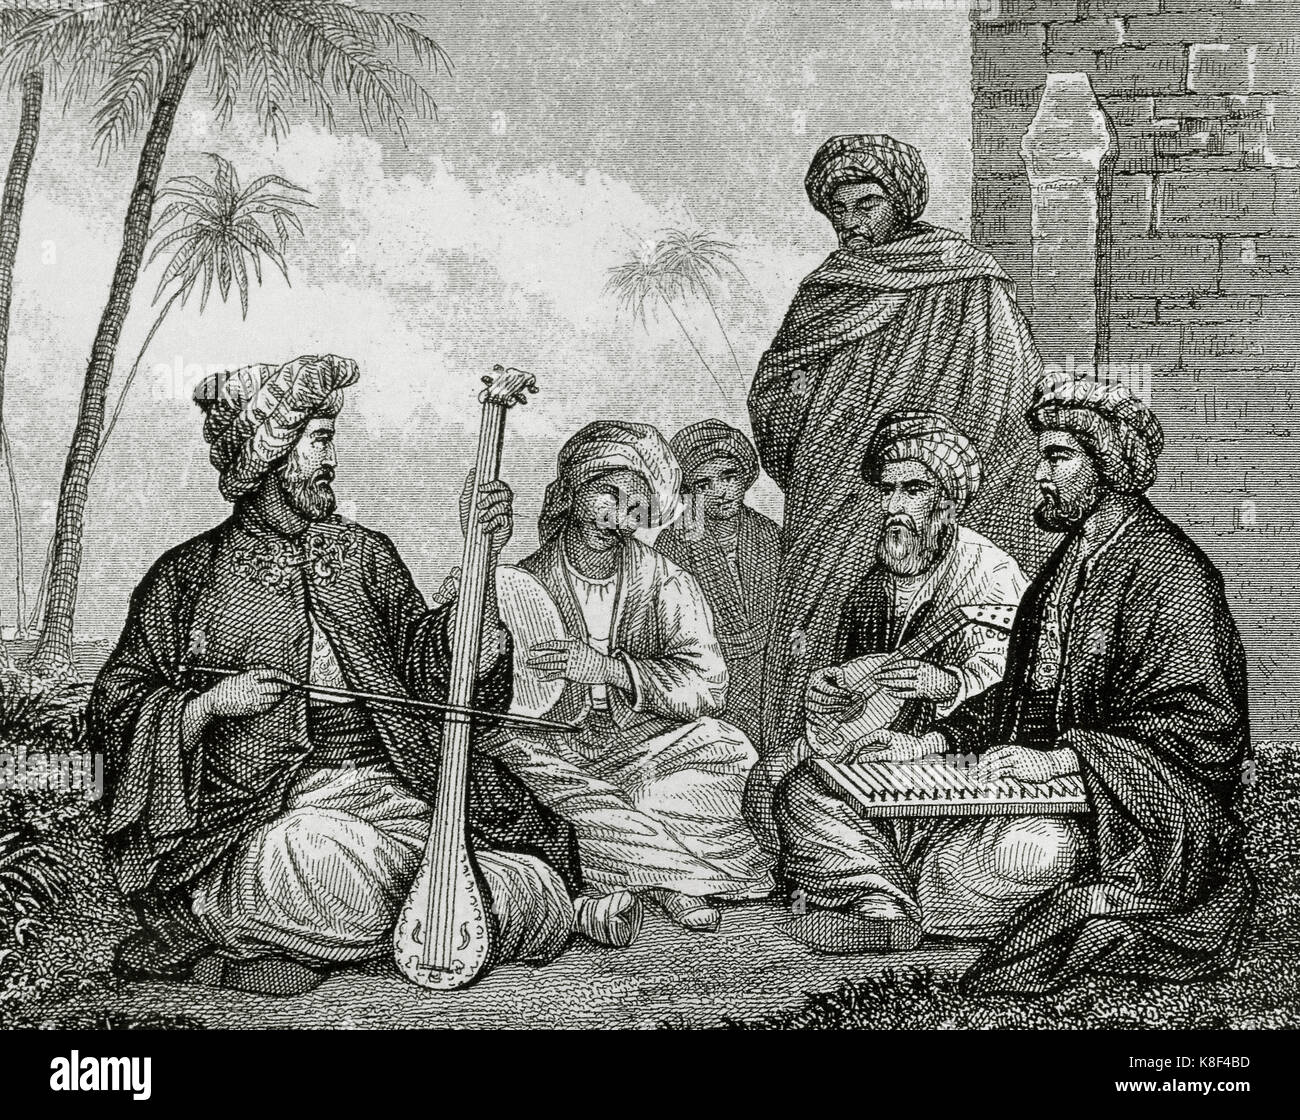 Arabian musicians. Engraving. 19th century. Stock Photo